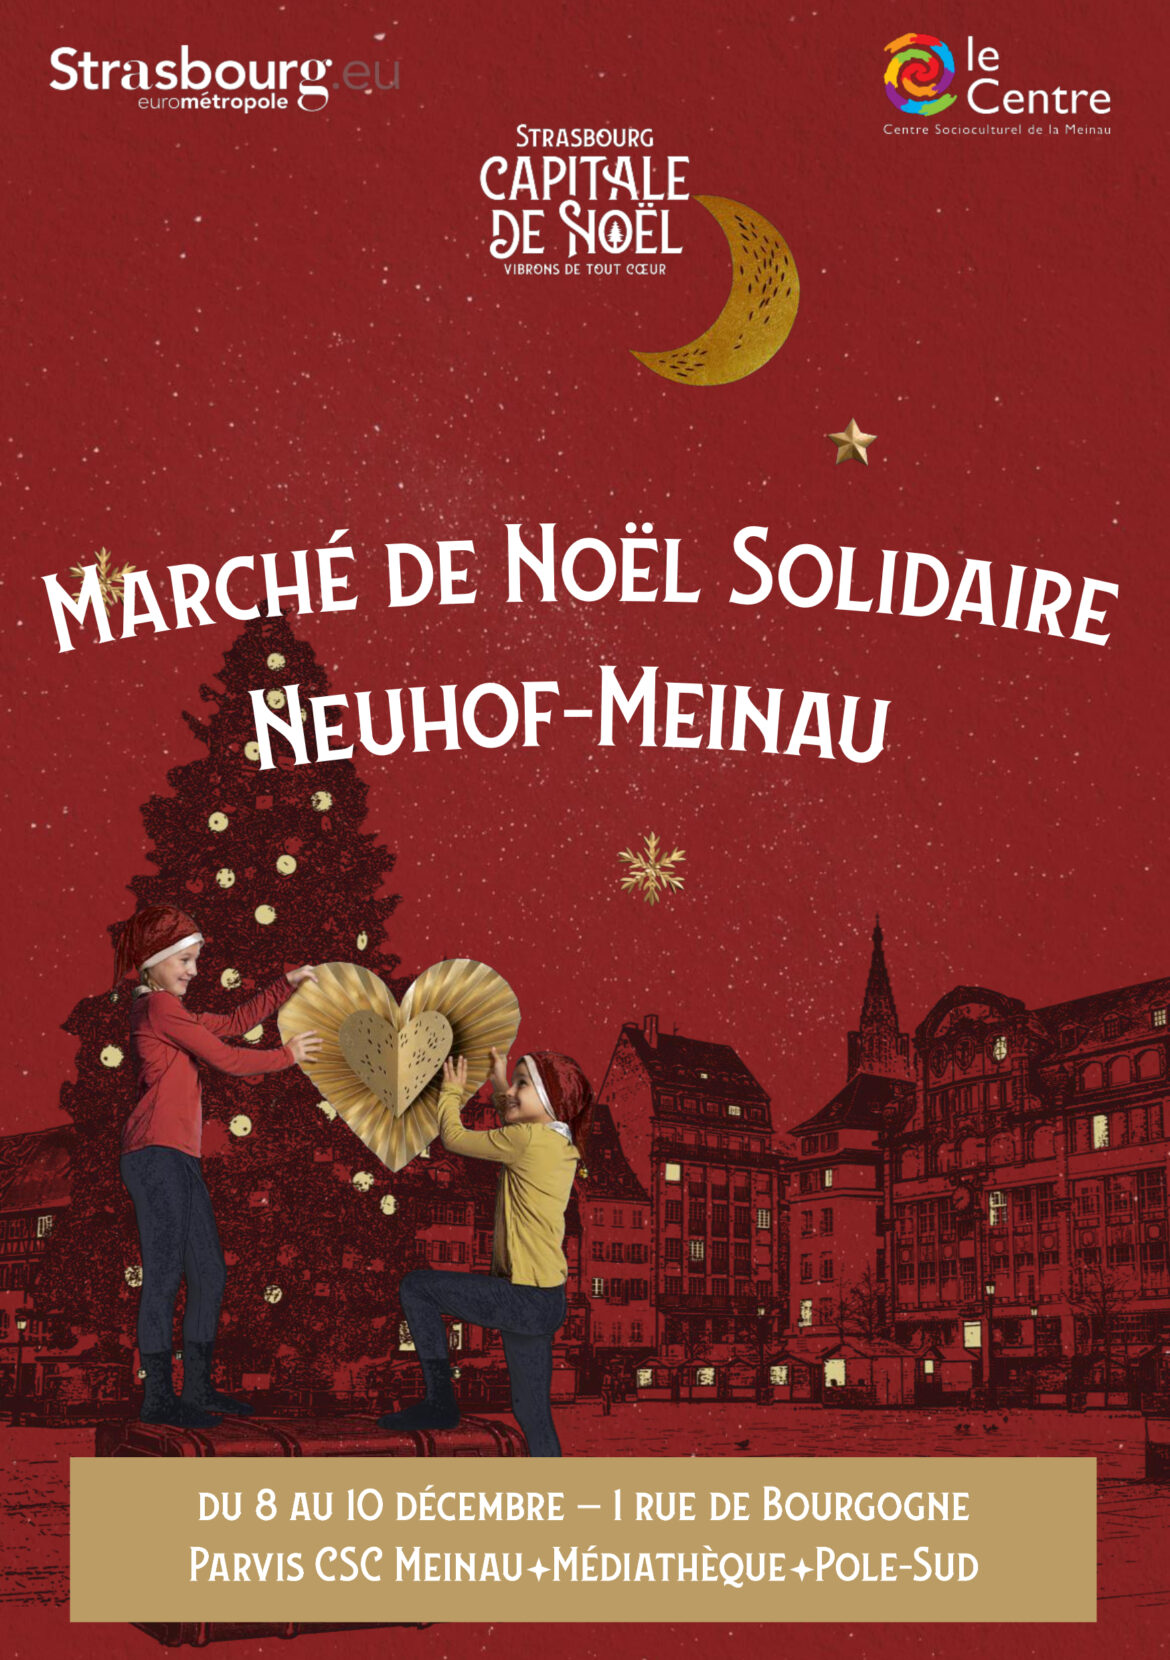 Marché de Noël solidaire Neuhof-Meinau